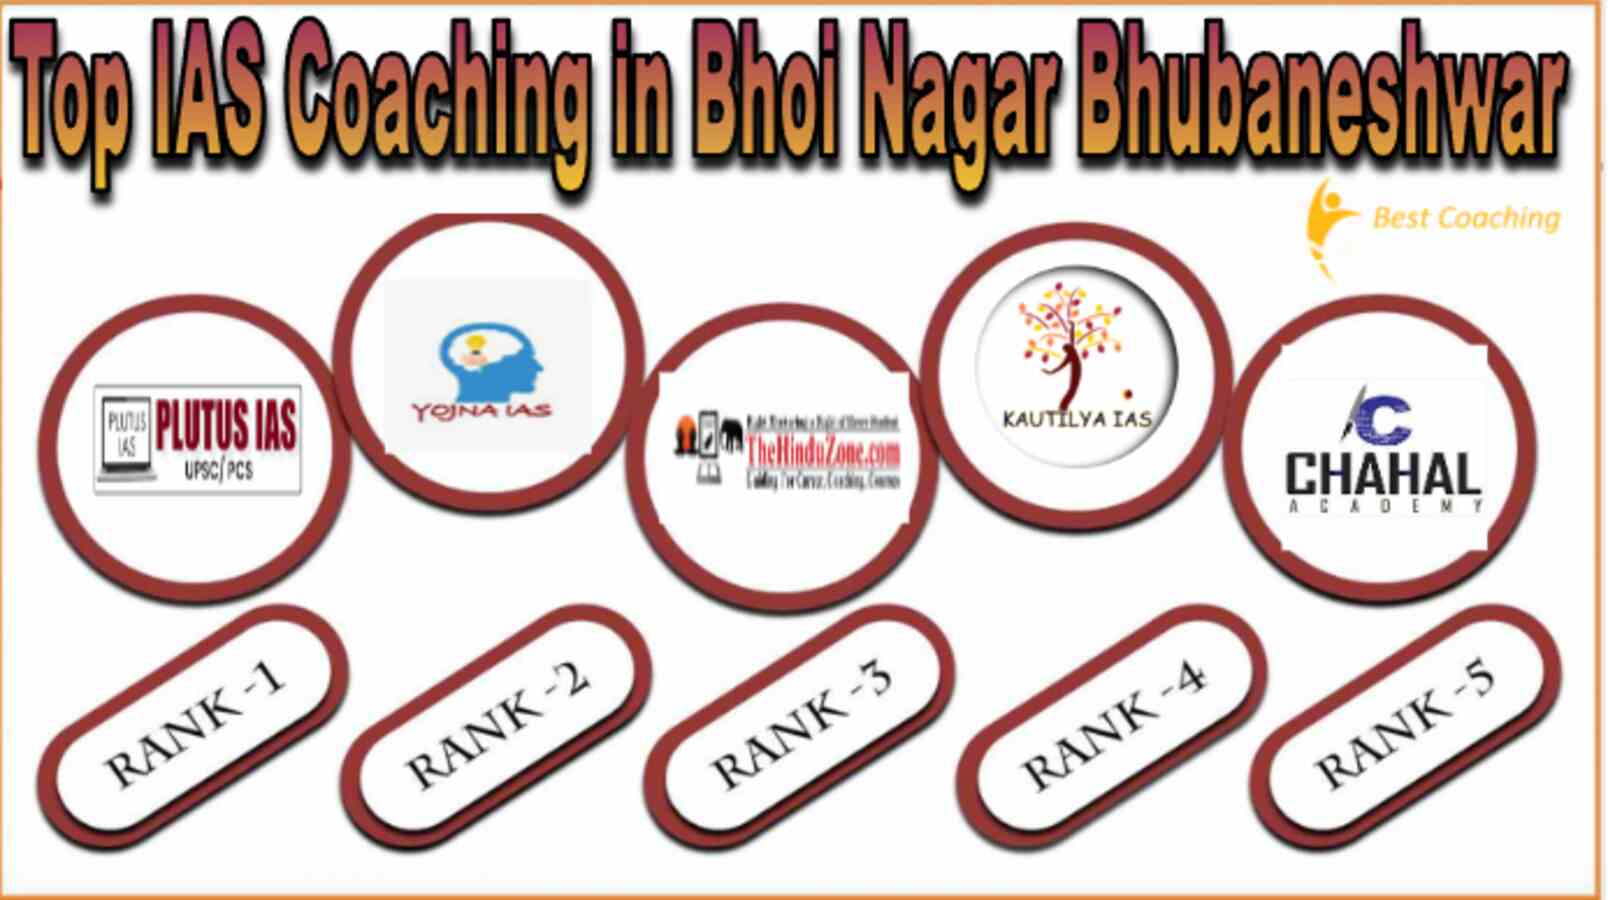 Top IAS coaching in Bhoi Nagar Bhubaneshwar